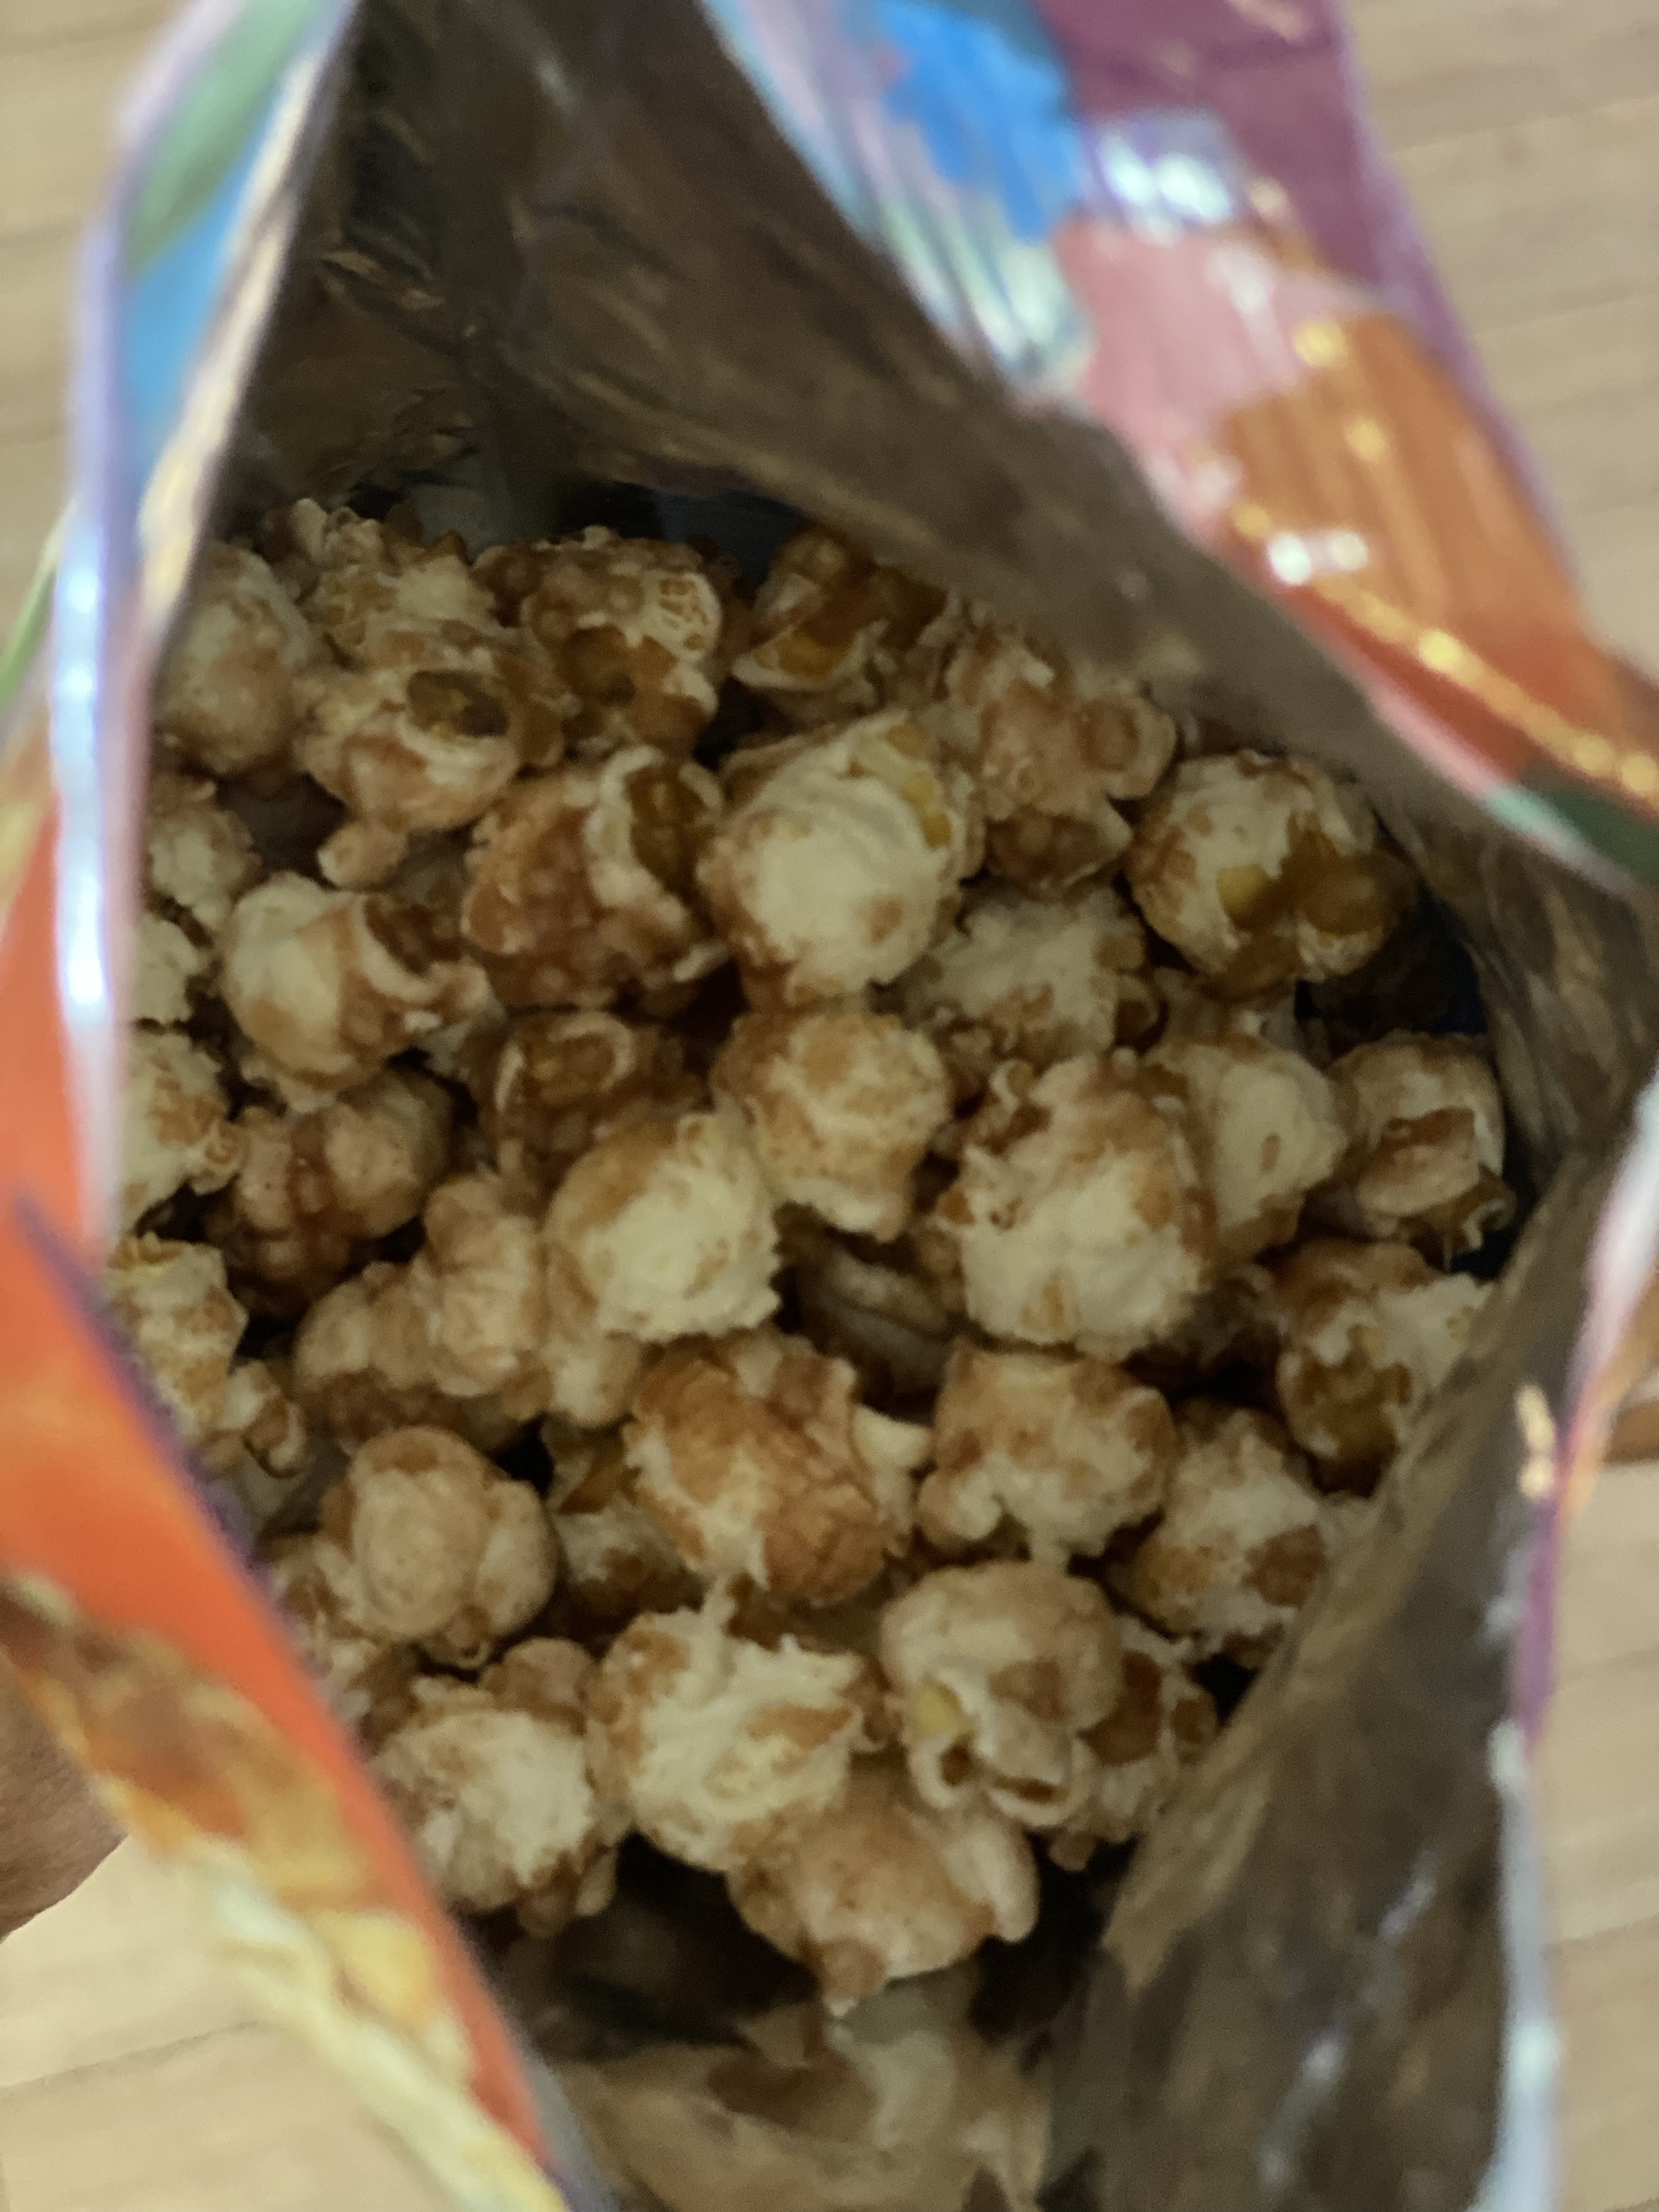 open bag showing popcorn